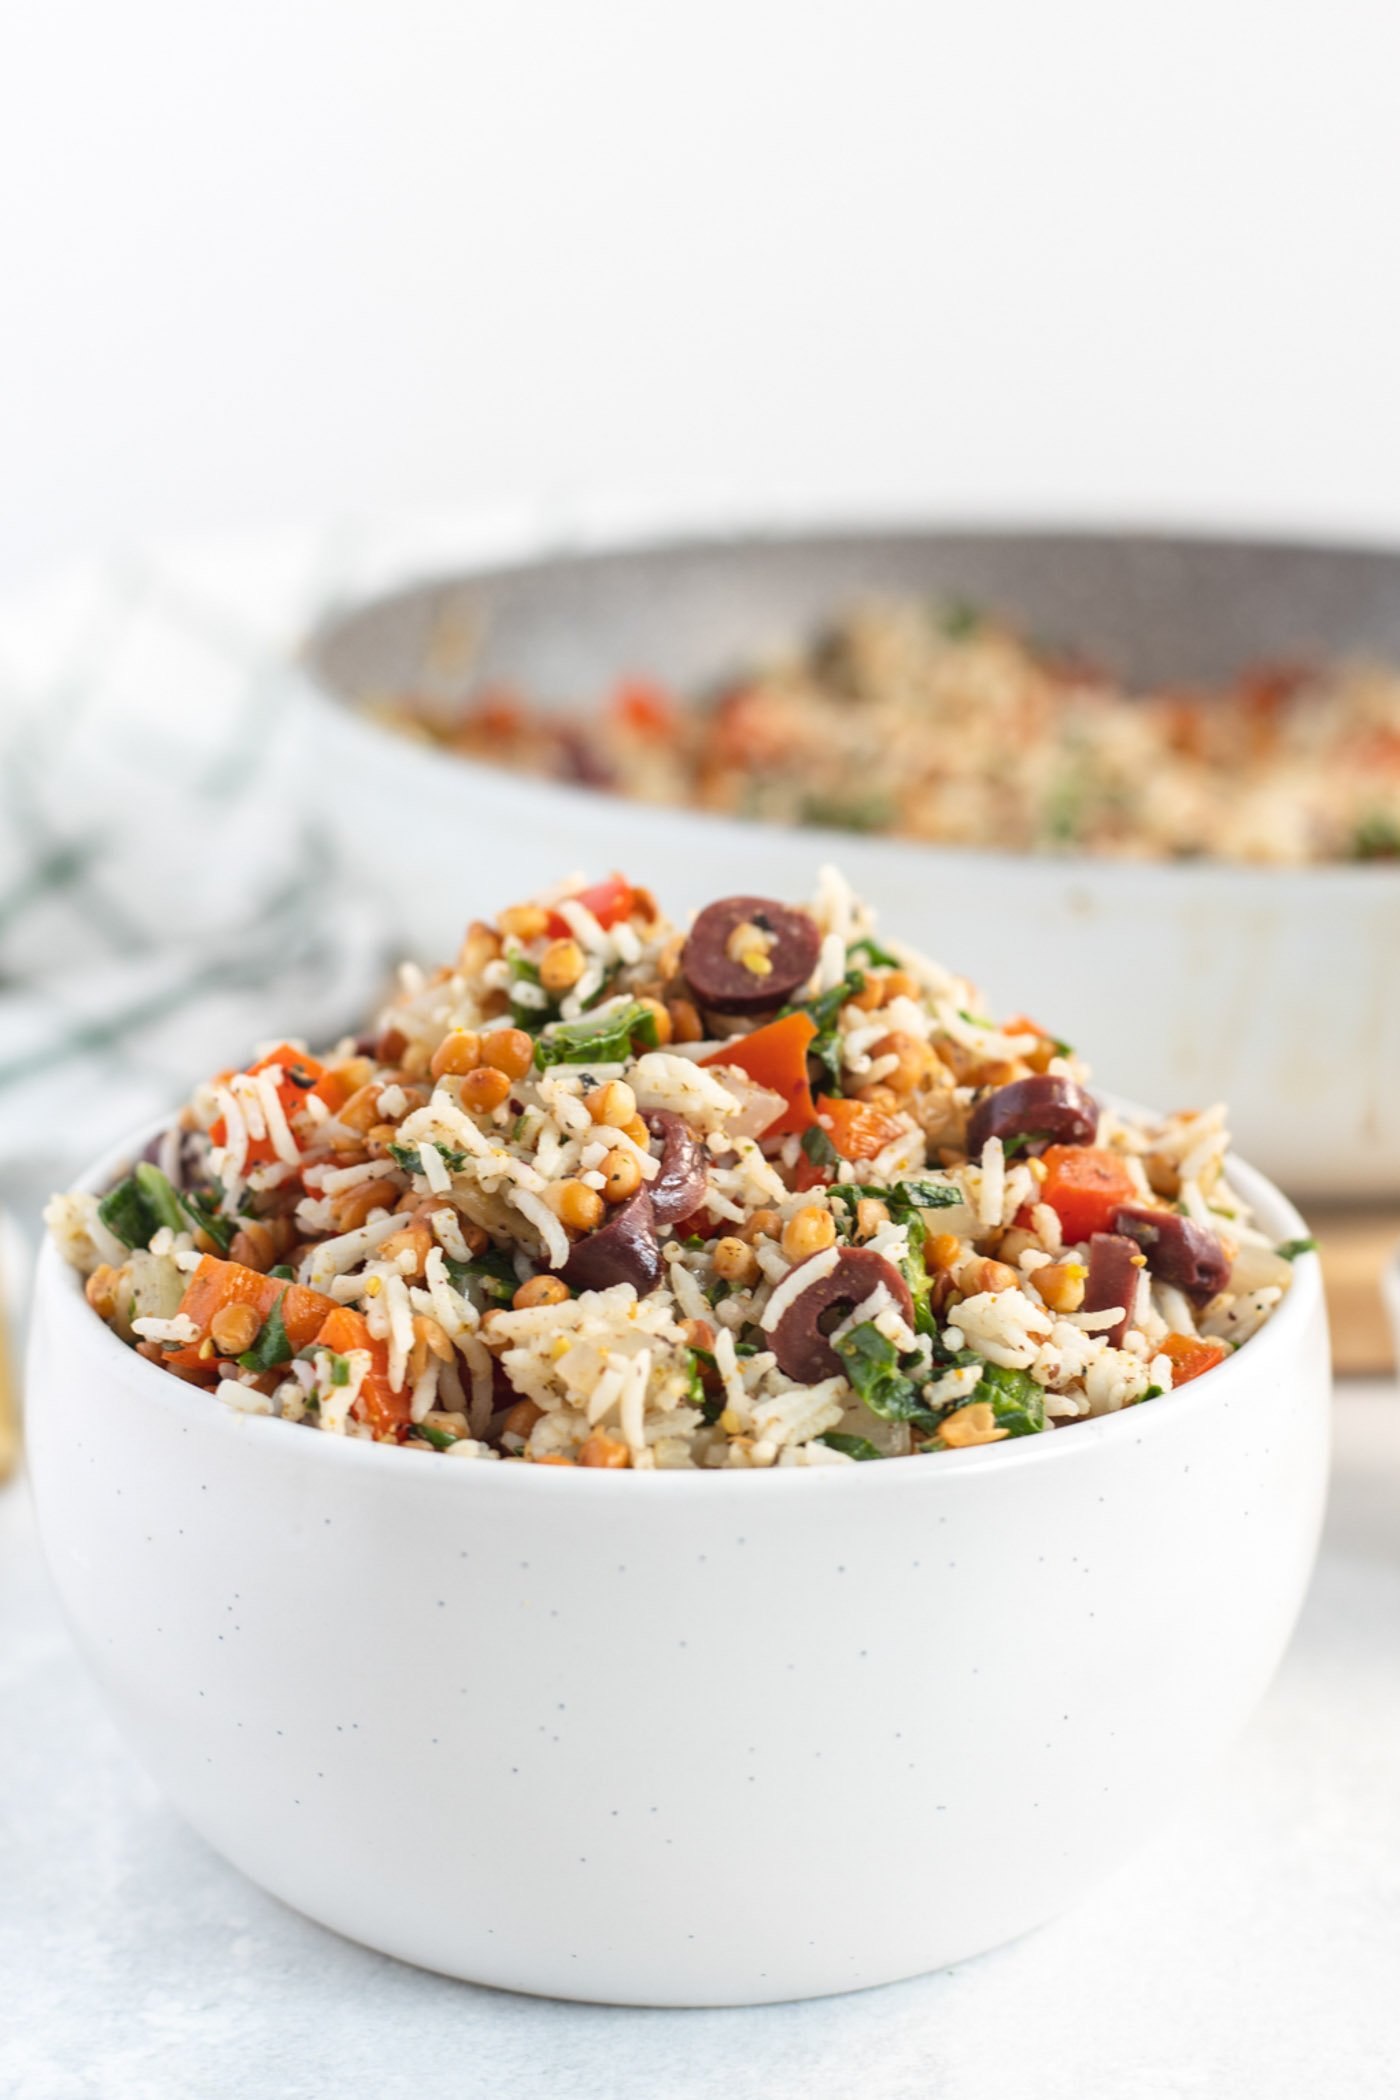 https://runningonrealfood.com/wp-content/uploads/2021/07/Vegan-Mediterranean-Rice-and-Lentils-Recipe-25.jpg